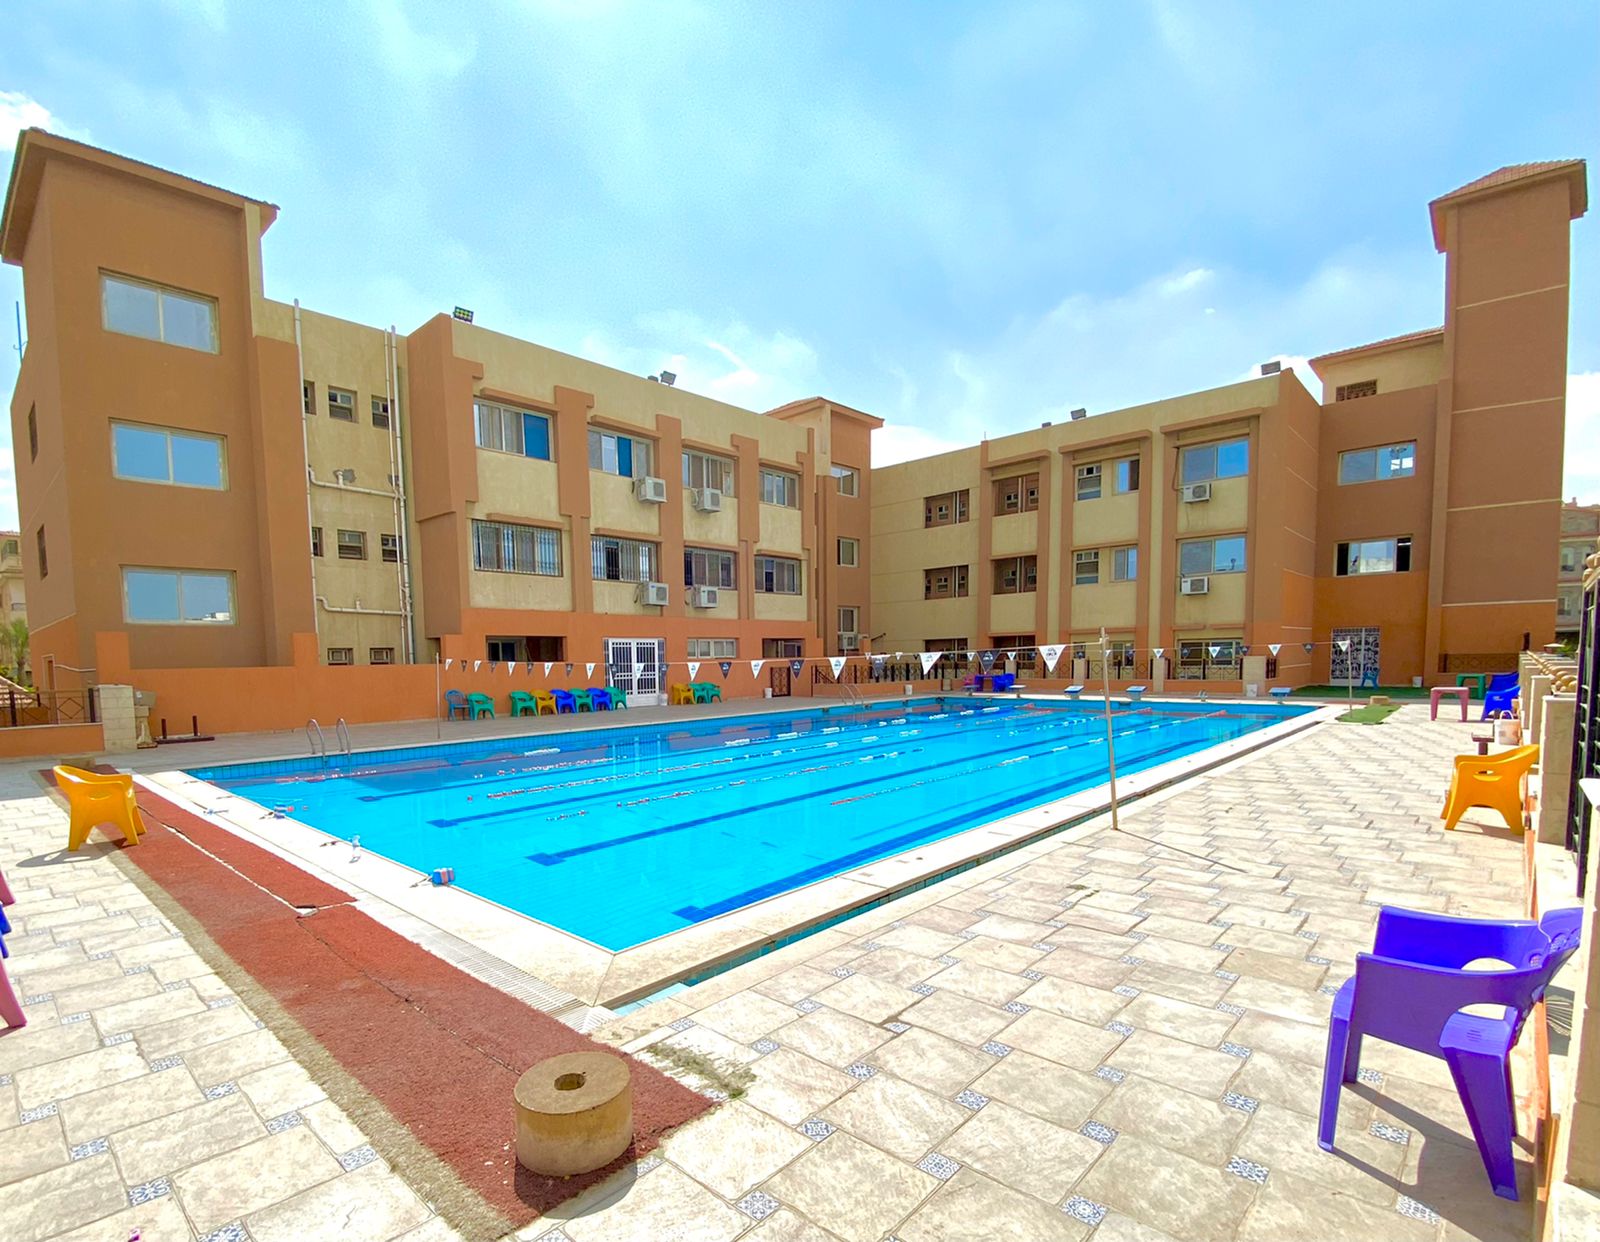 Nile International College Swimming Pool